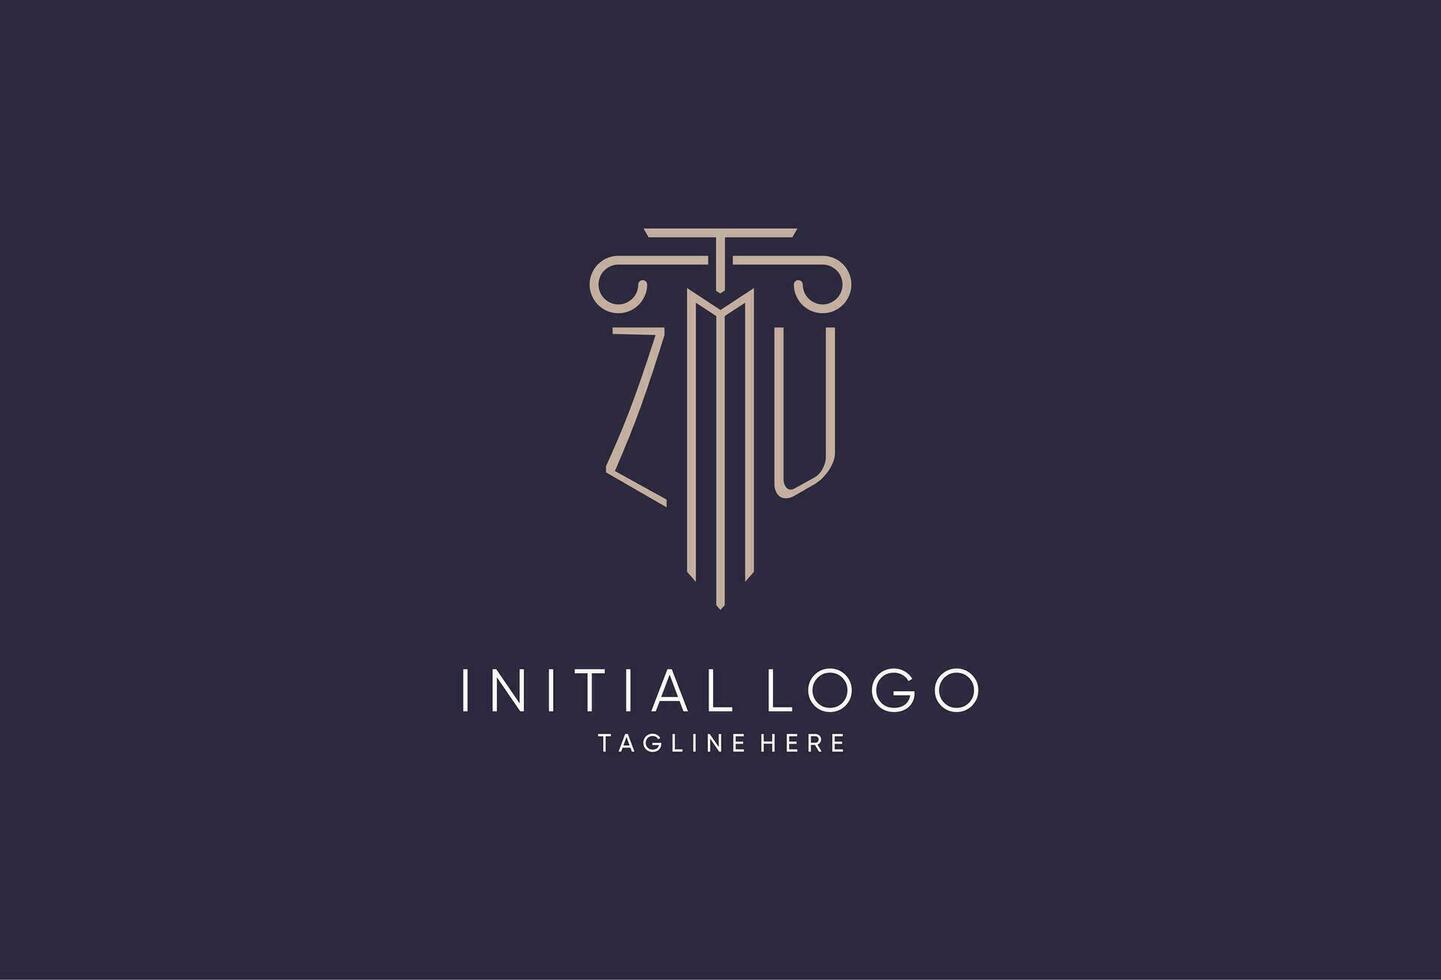 zu logo inicial pilar diseño con lujo moderno estilo mejor diseño para legal firma vector